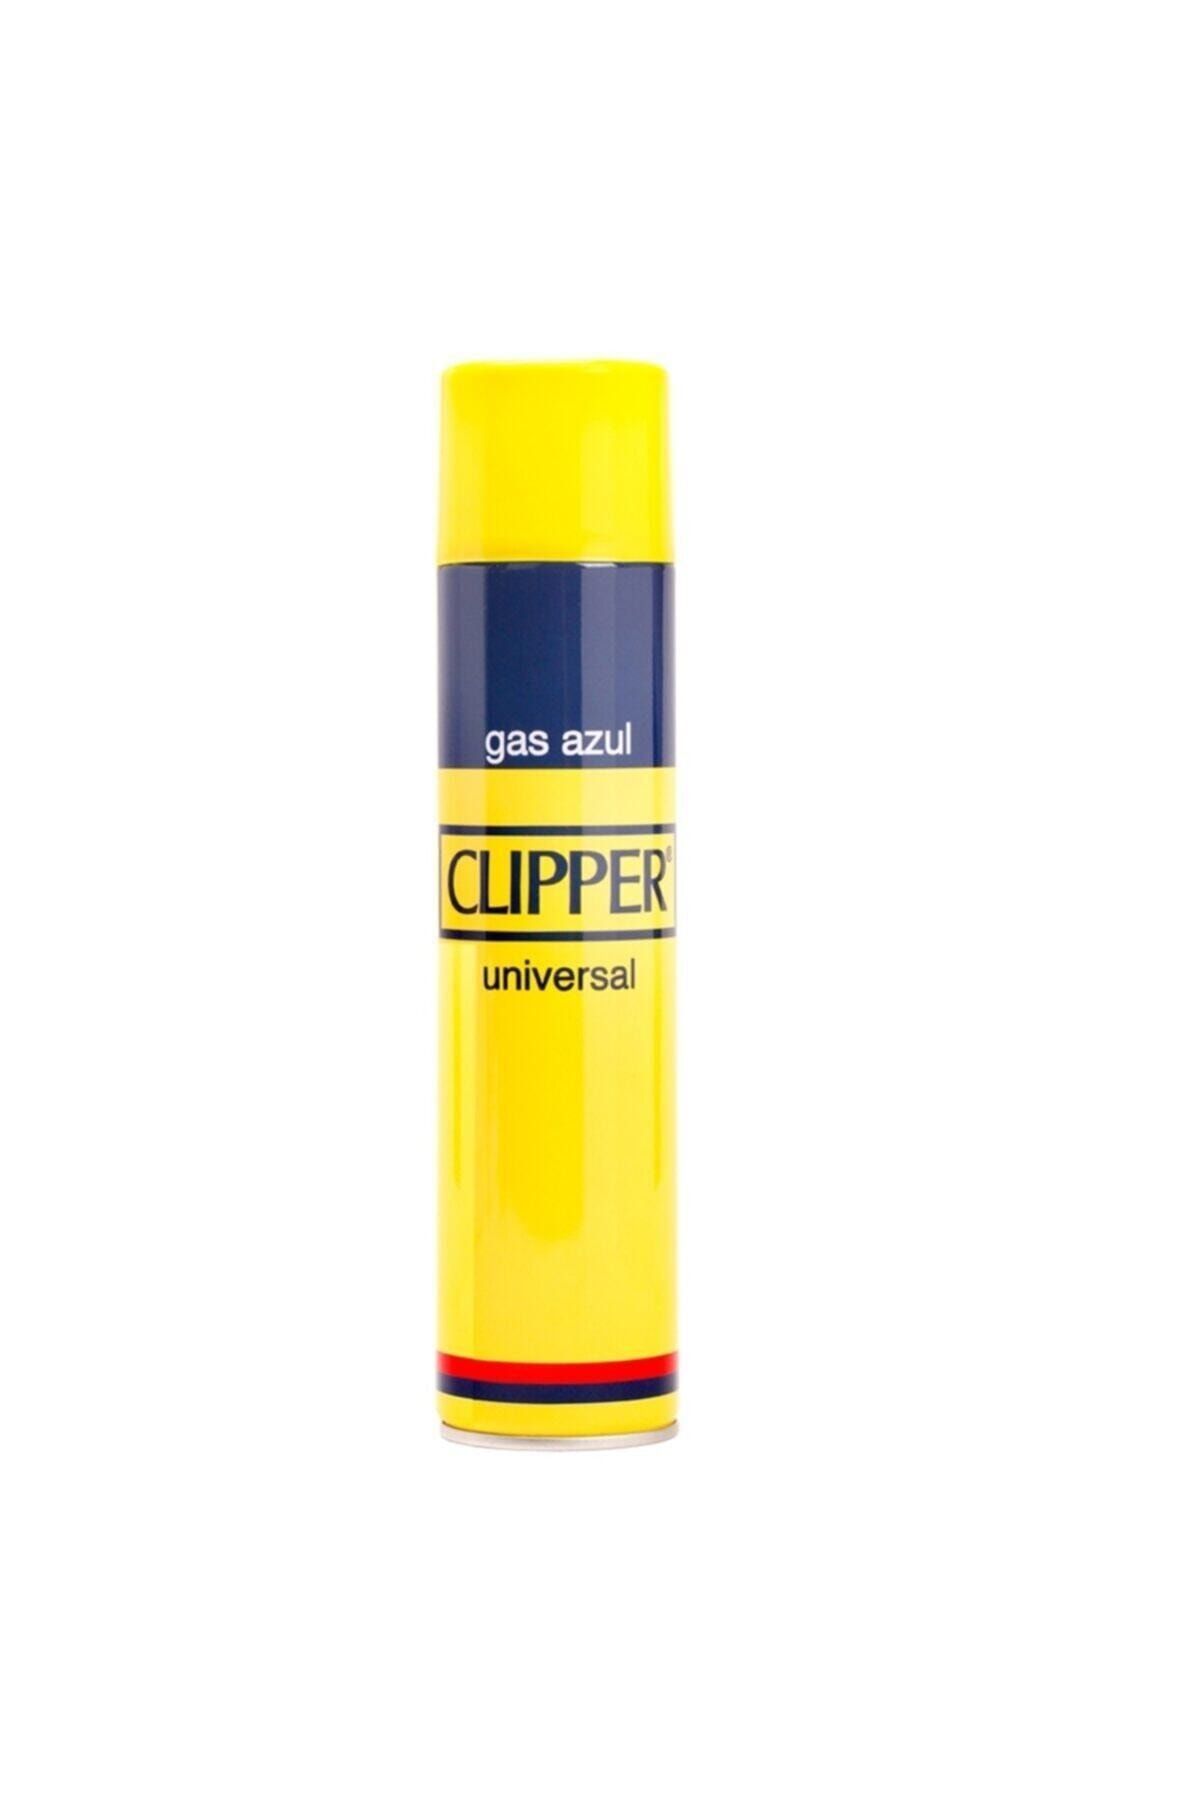 Clipper Ünyepark 250 Ml. Universal Gas Azul Çakmak Gazı